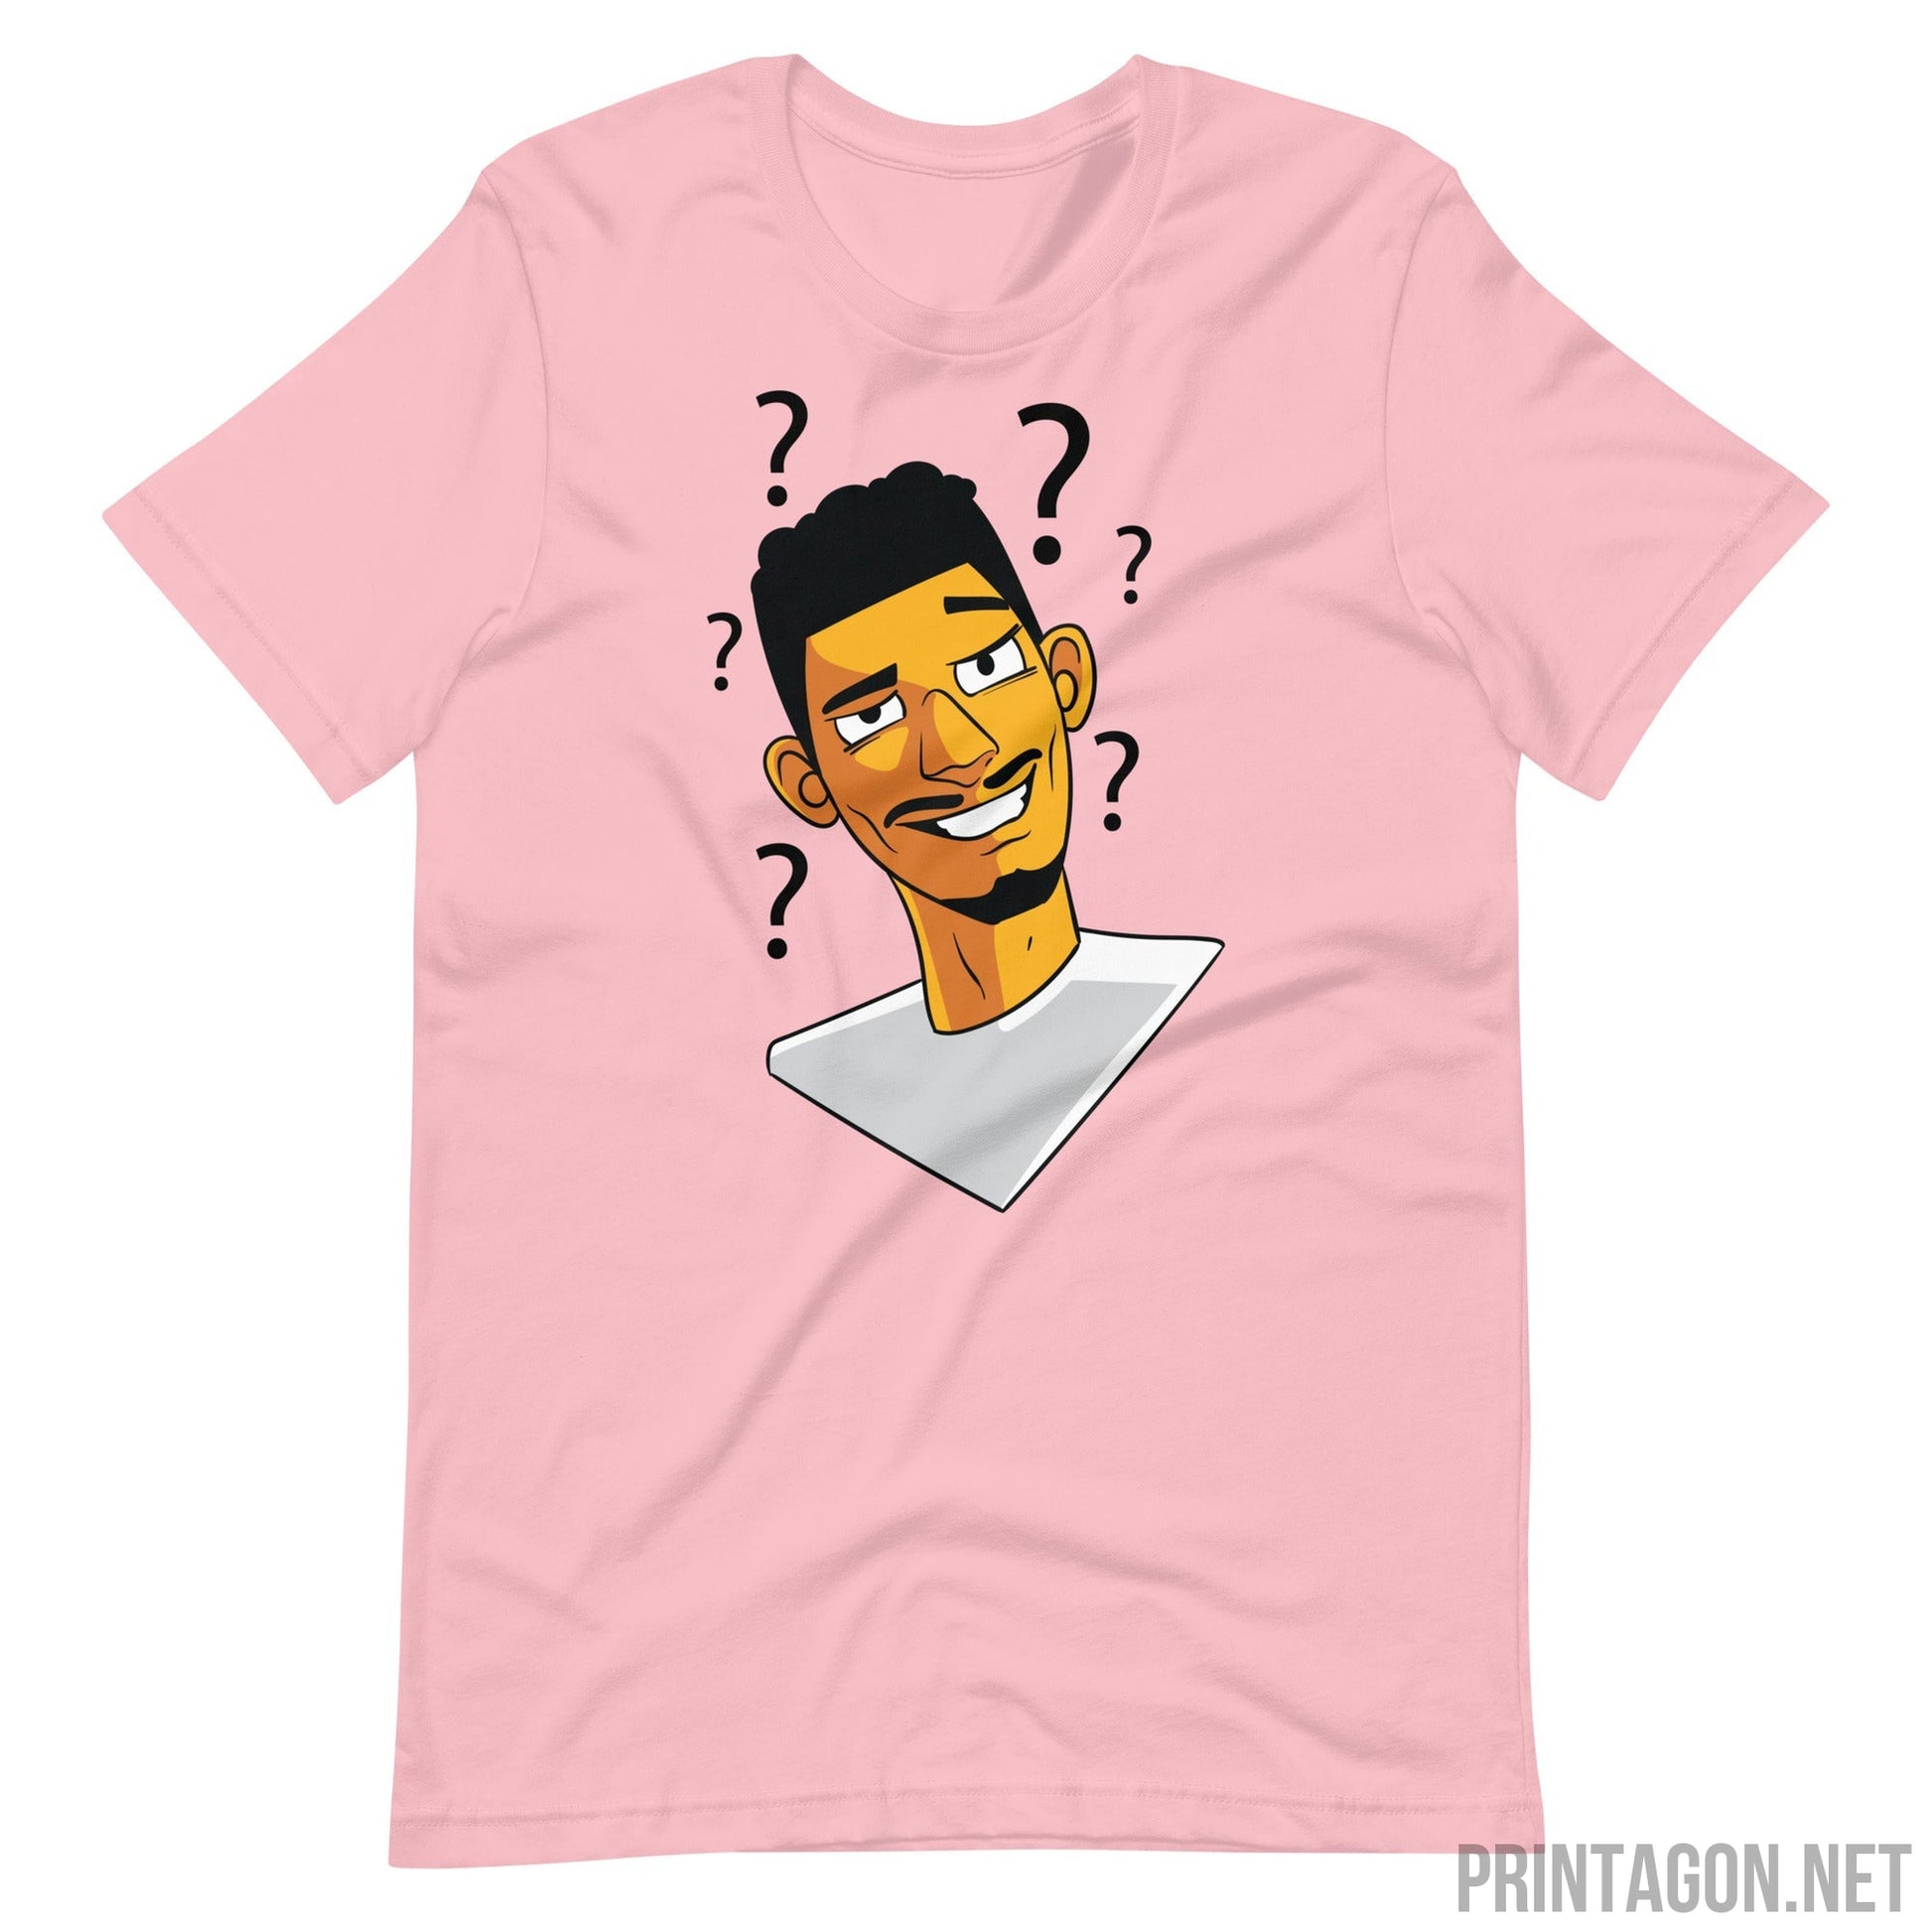 Printagon - Confused Man - Unisex T-shirt - Pink / S